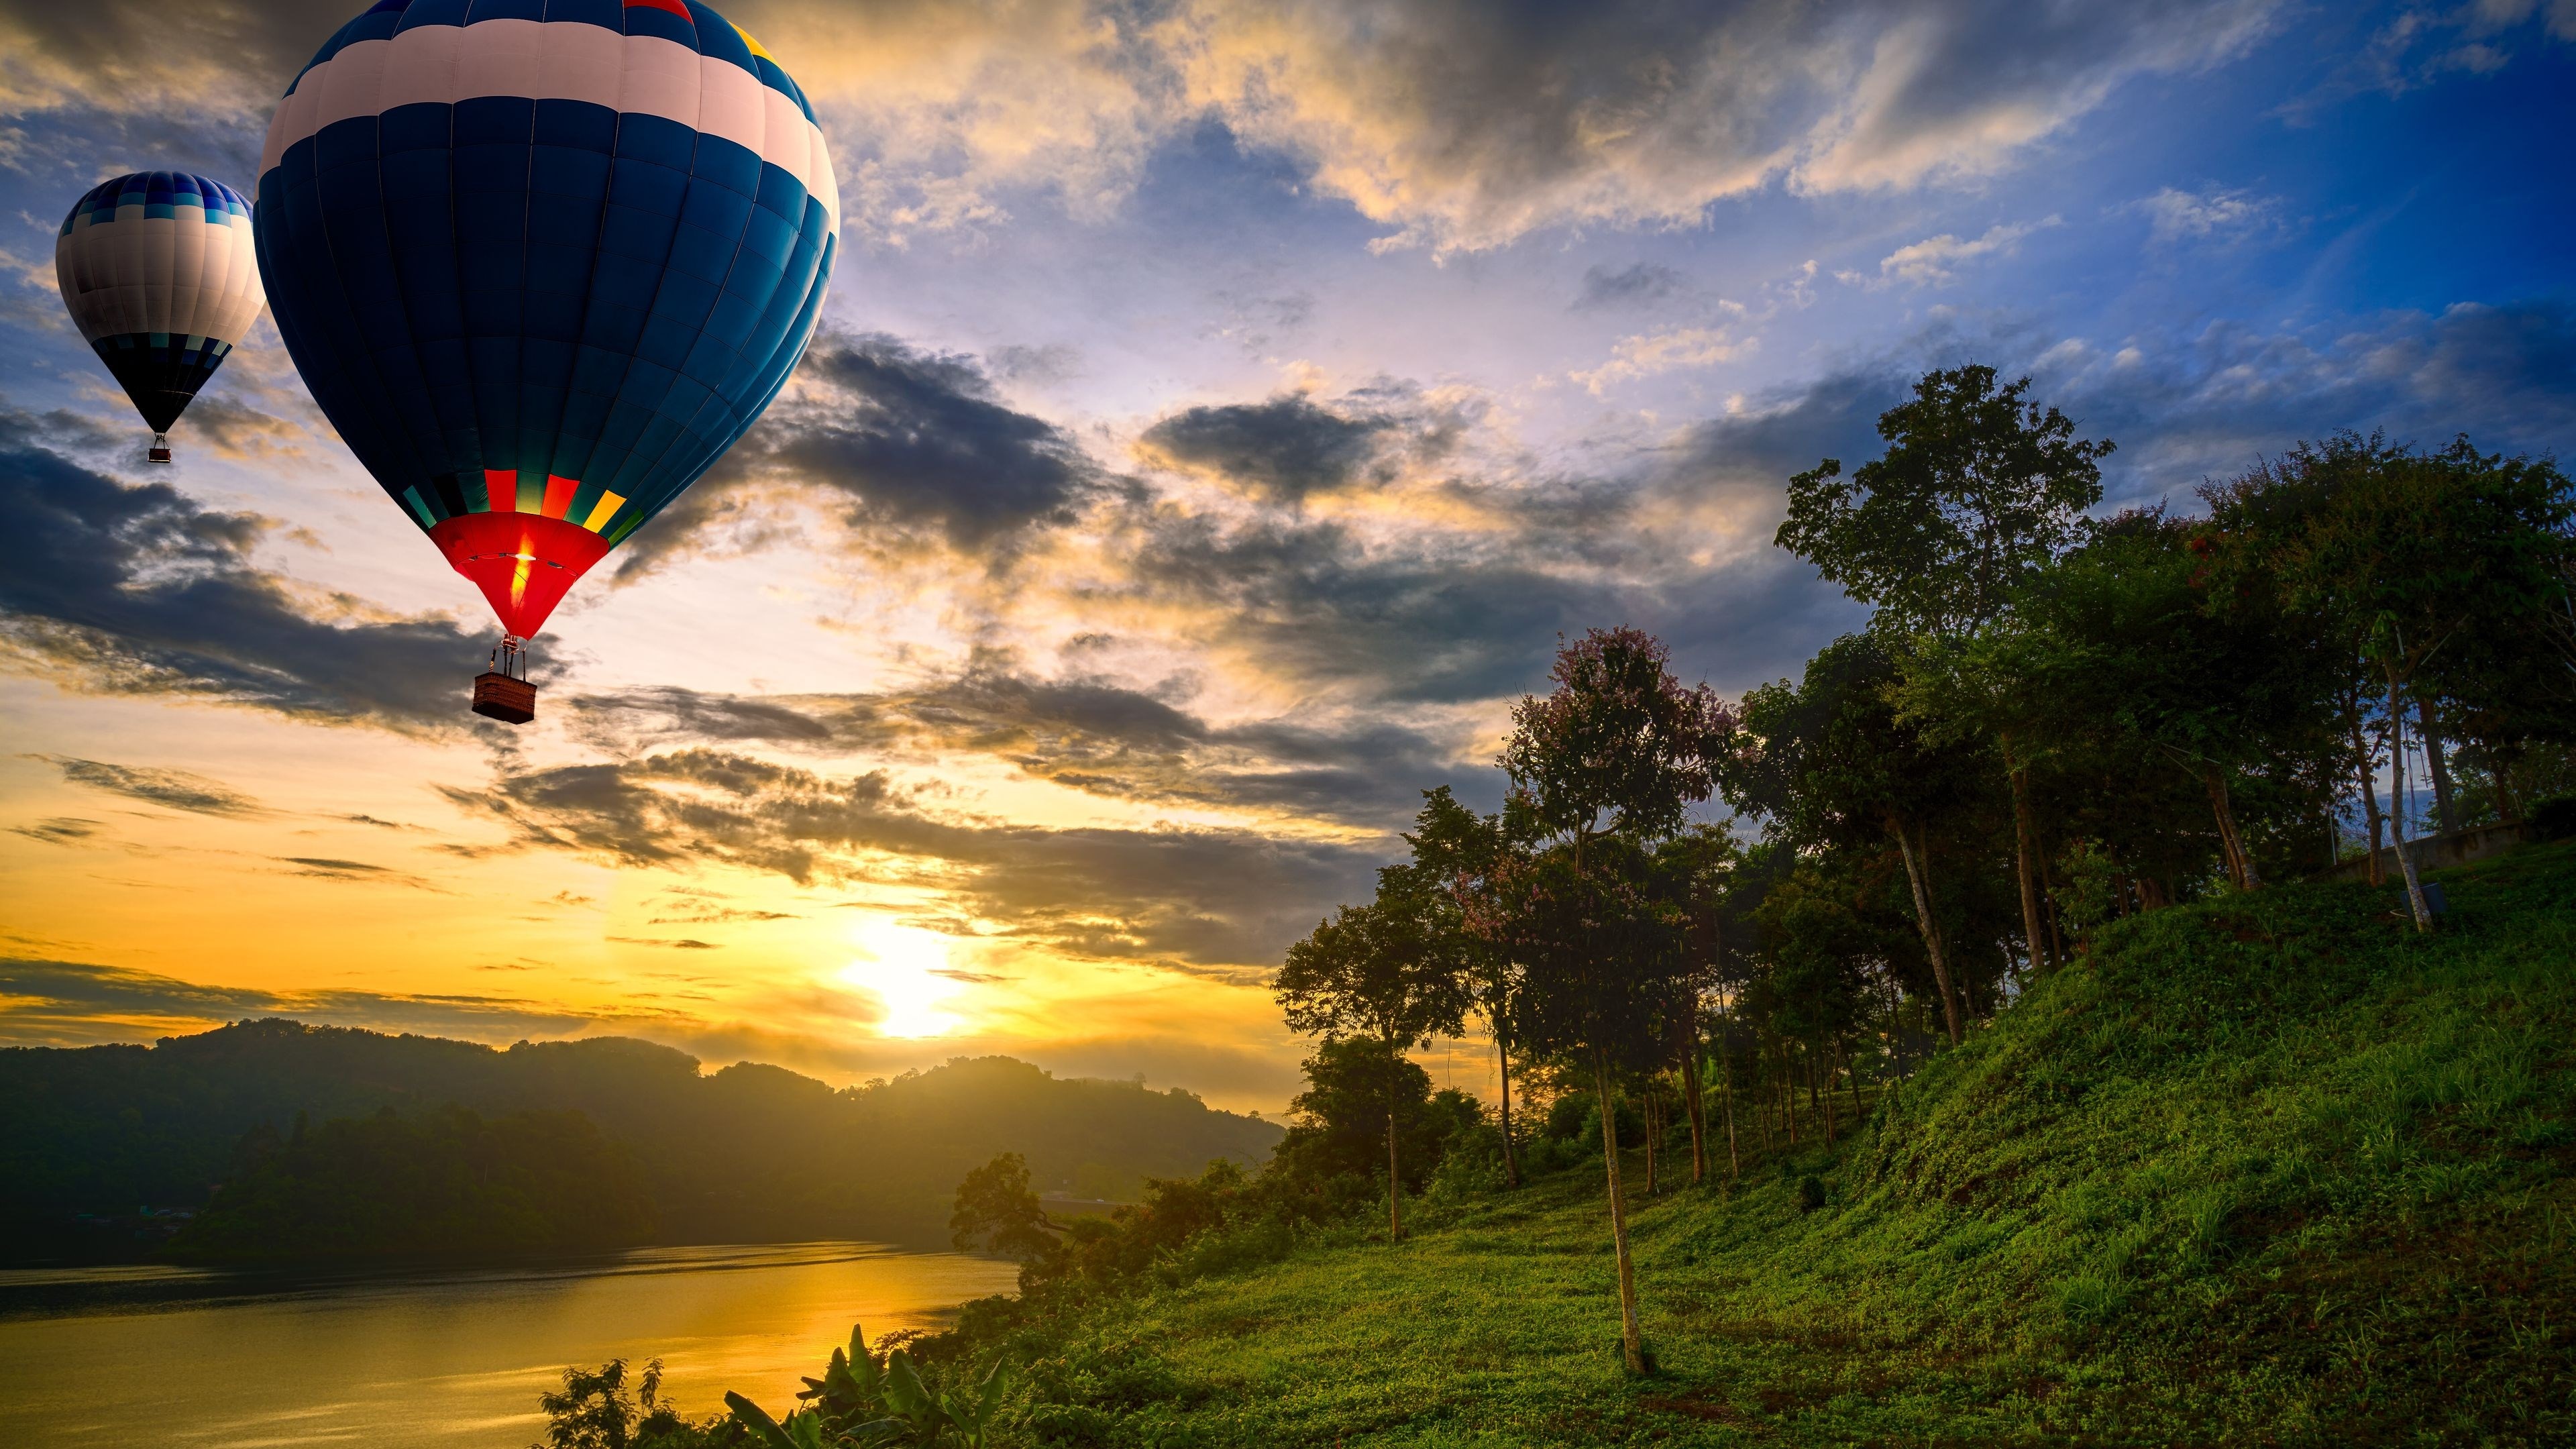 Hot Air Balloon: Sky Trip, Gondola, Divided Into Sections Envelope, Burner. 3840x2160 4K Wallpaper.